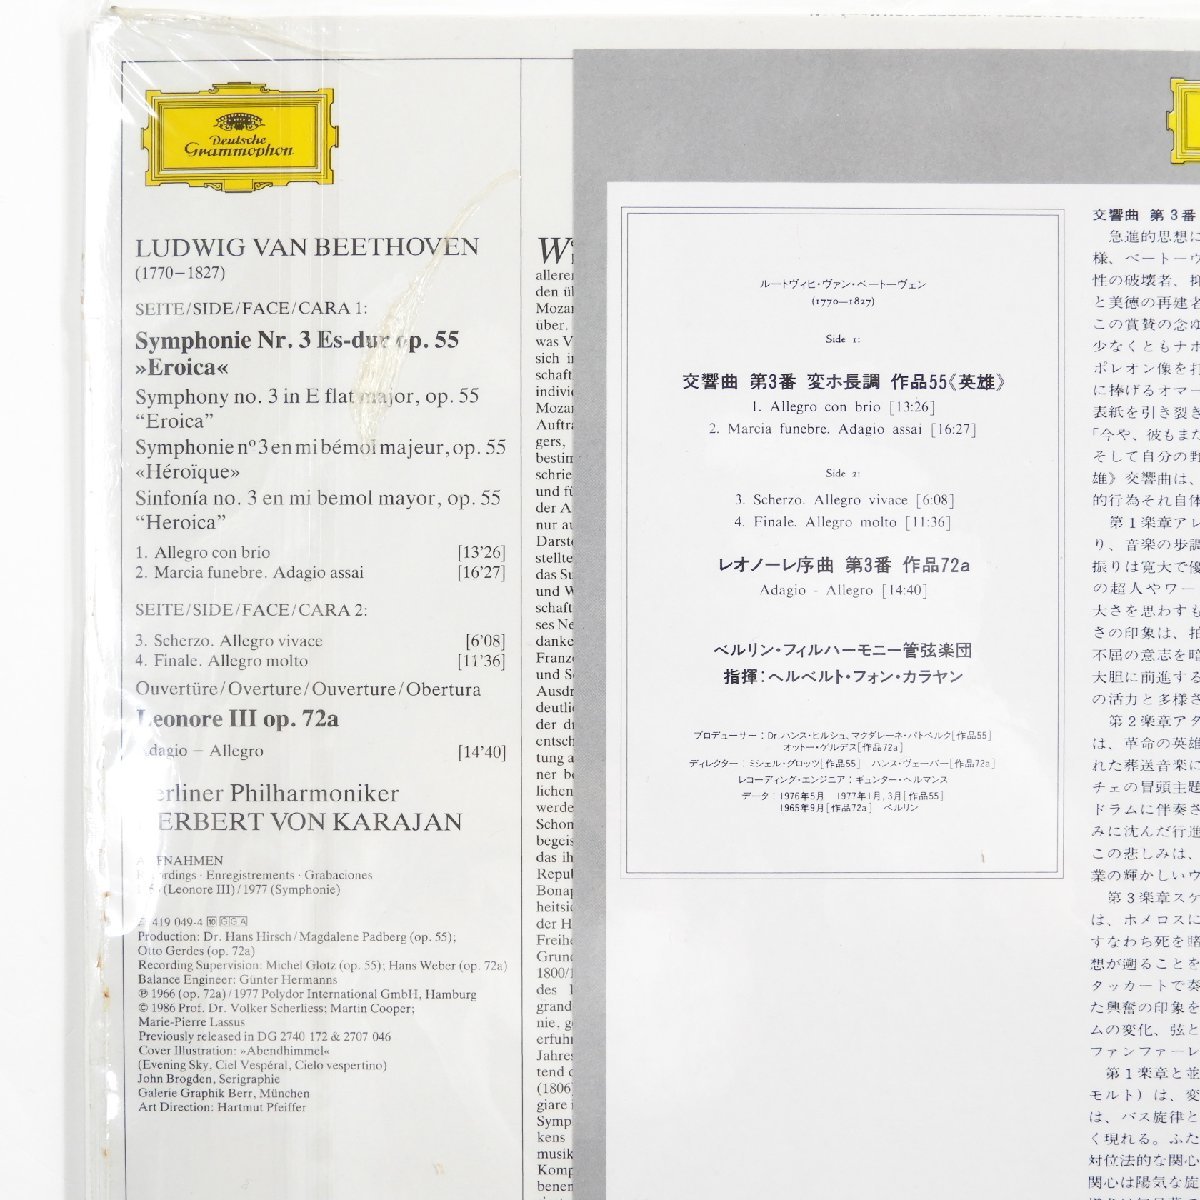 LP 18MG-4648 419 048-1 カラヤン ベートーヴェン 交響曲1番 第4番 エグモント序曲 ベルリン・フィル #16135 レコード 趣味 コレクション_画像3